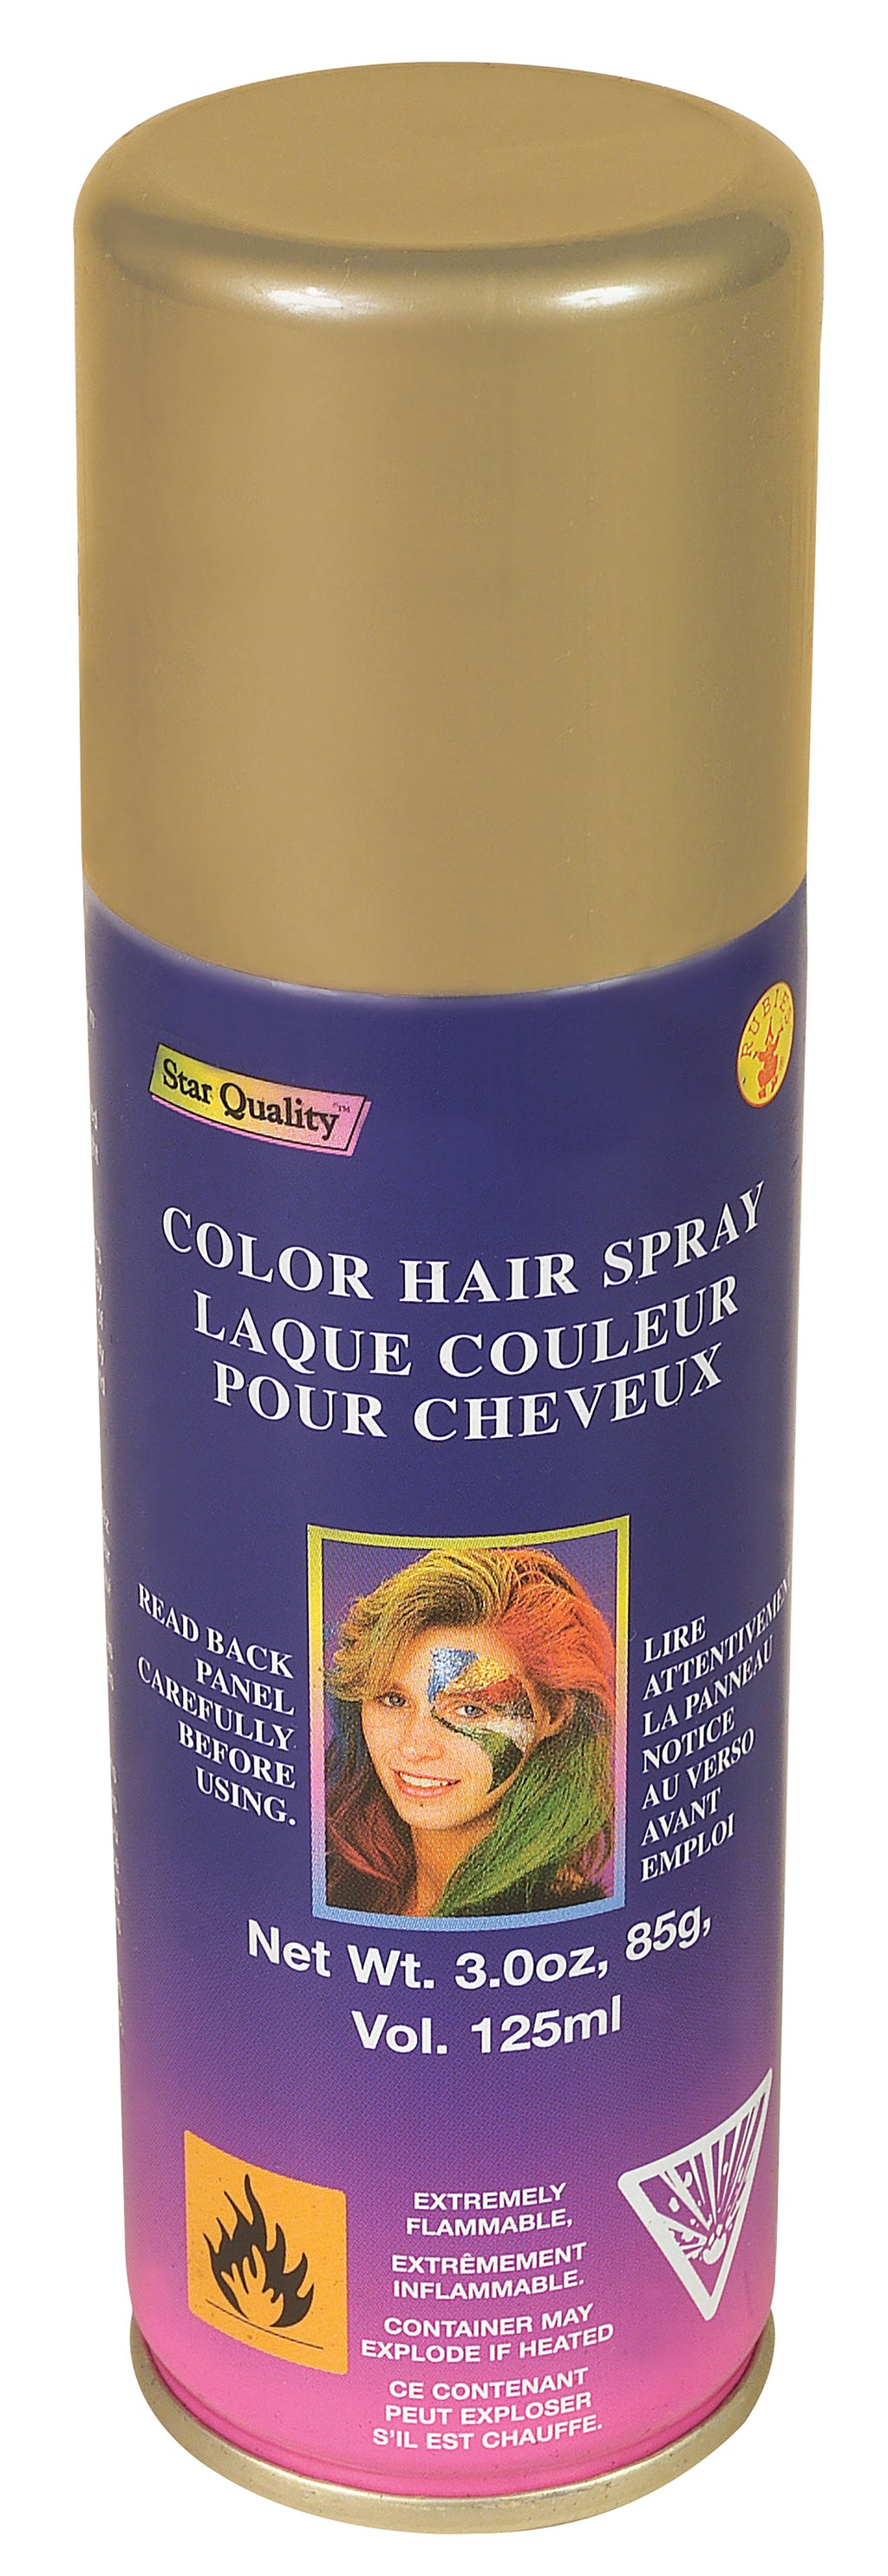 Hair Colour Spray - Gold